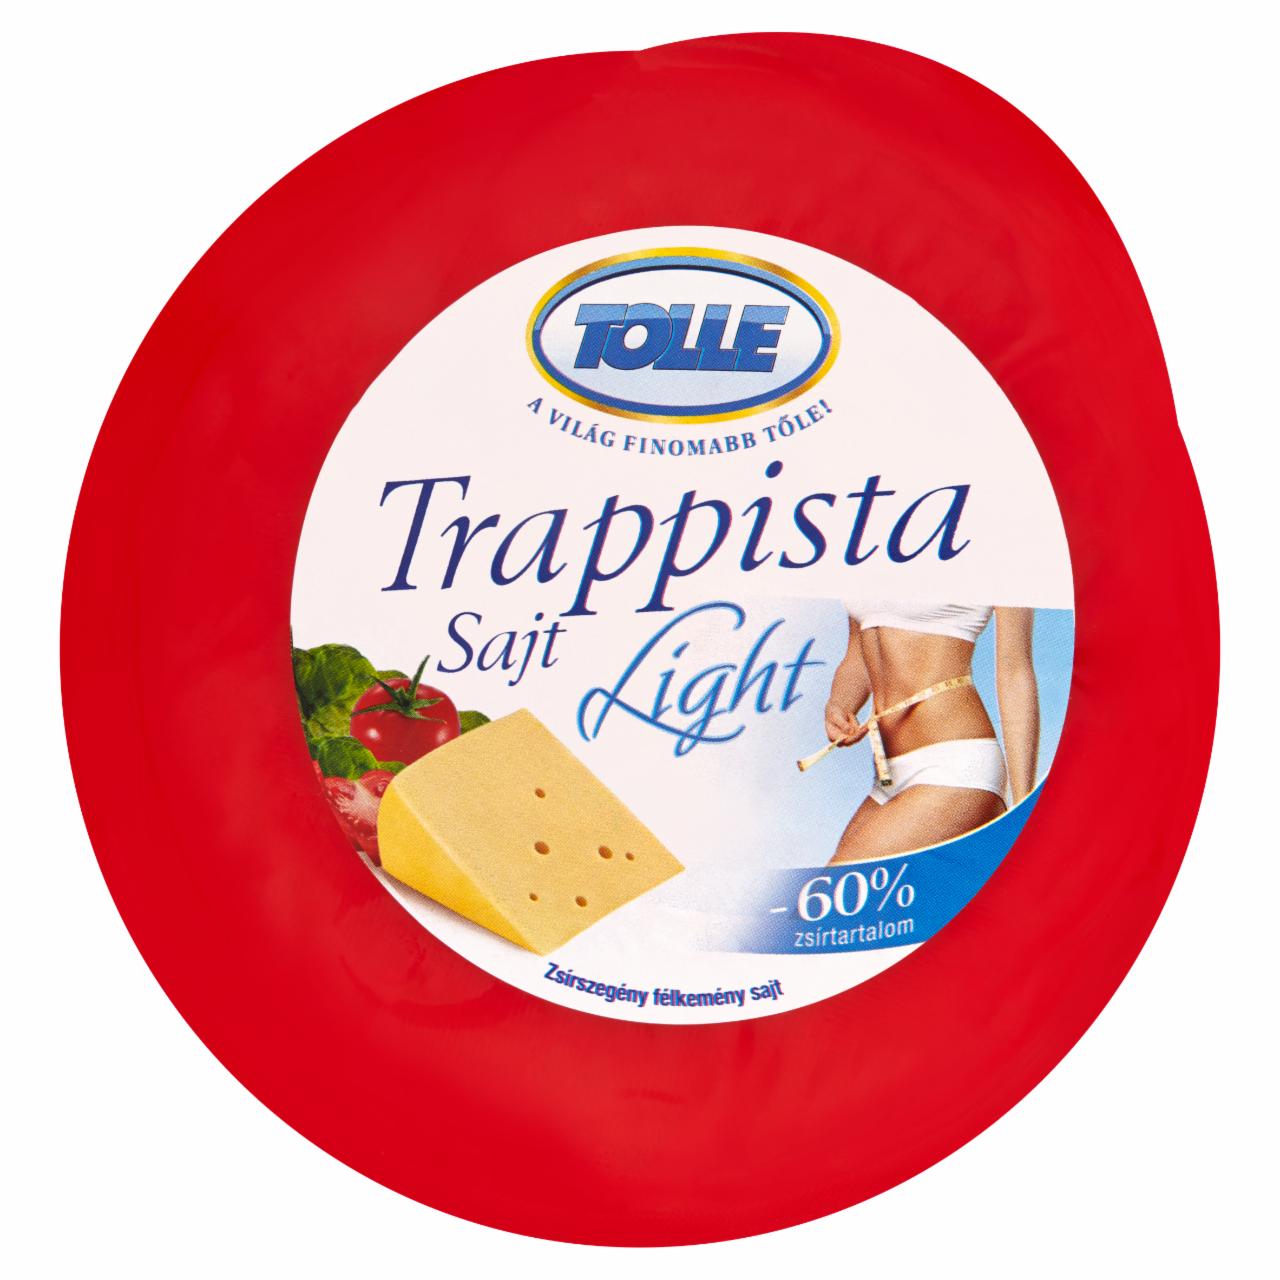 Képek - Tolle light trappista sajt